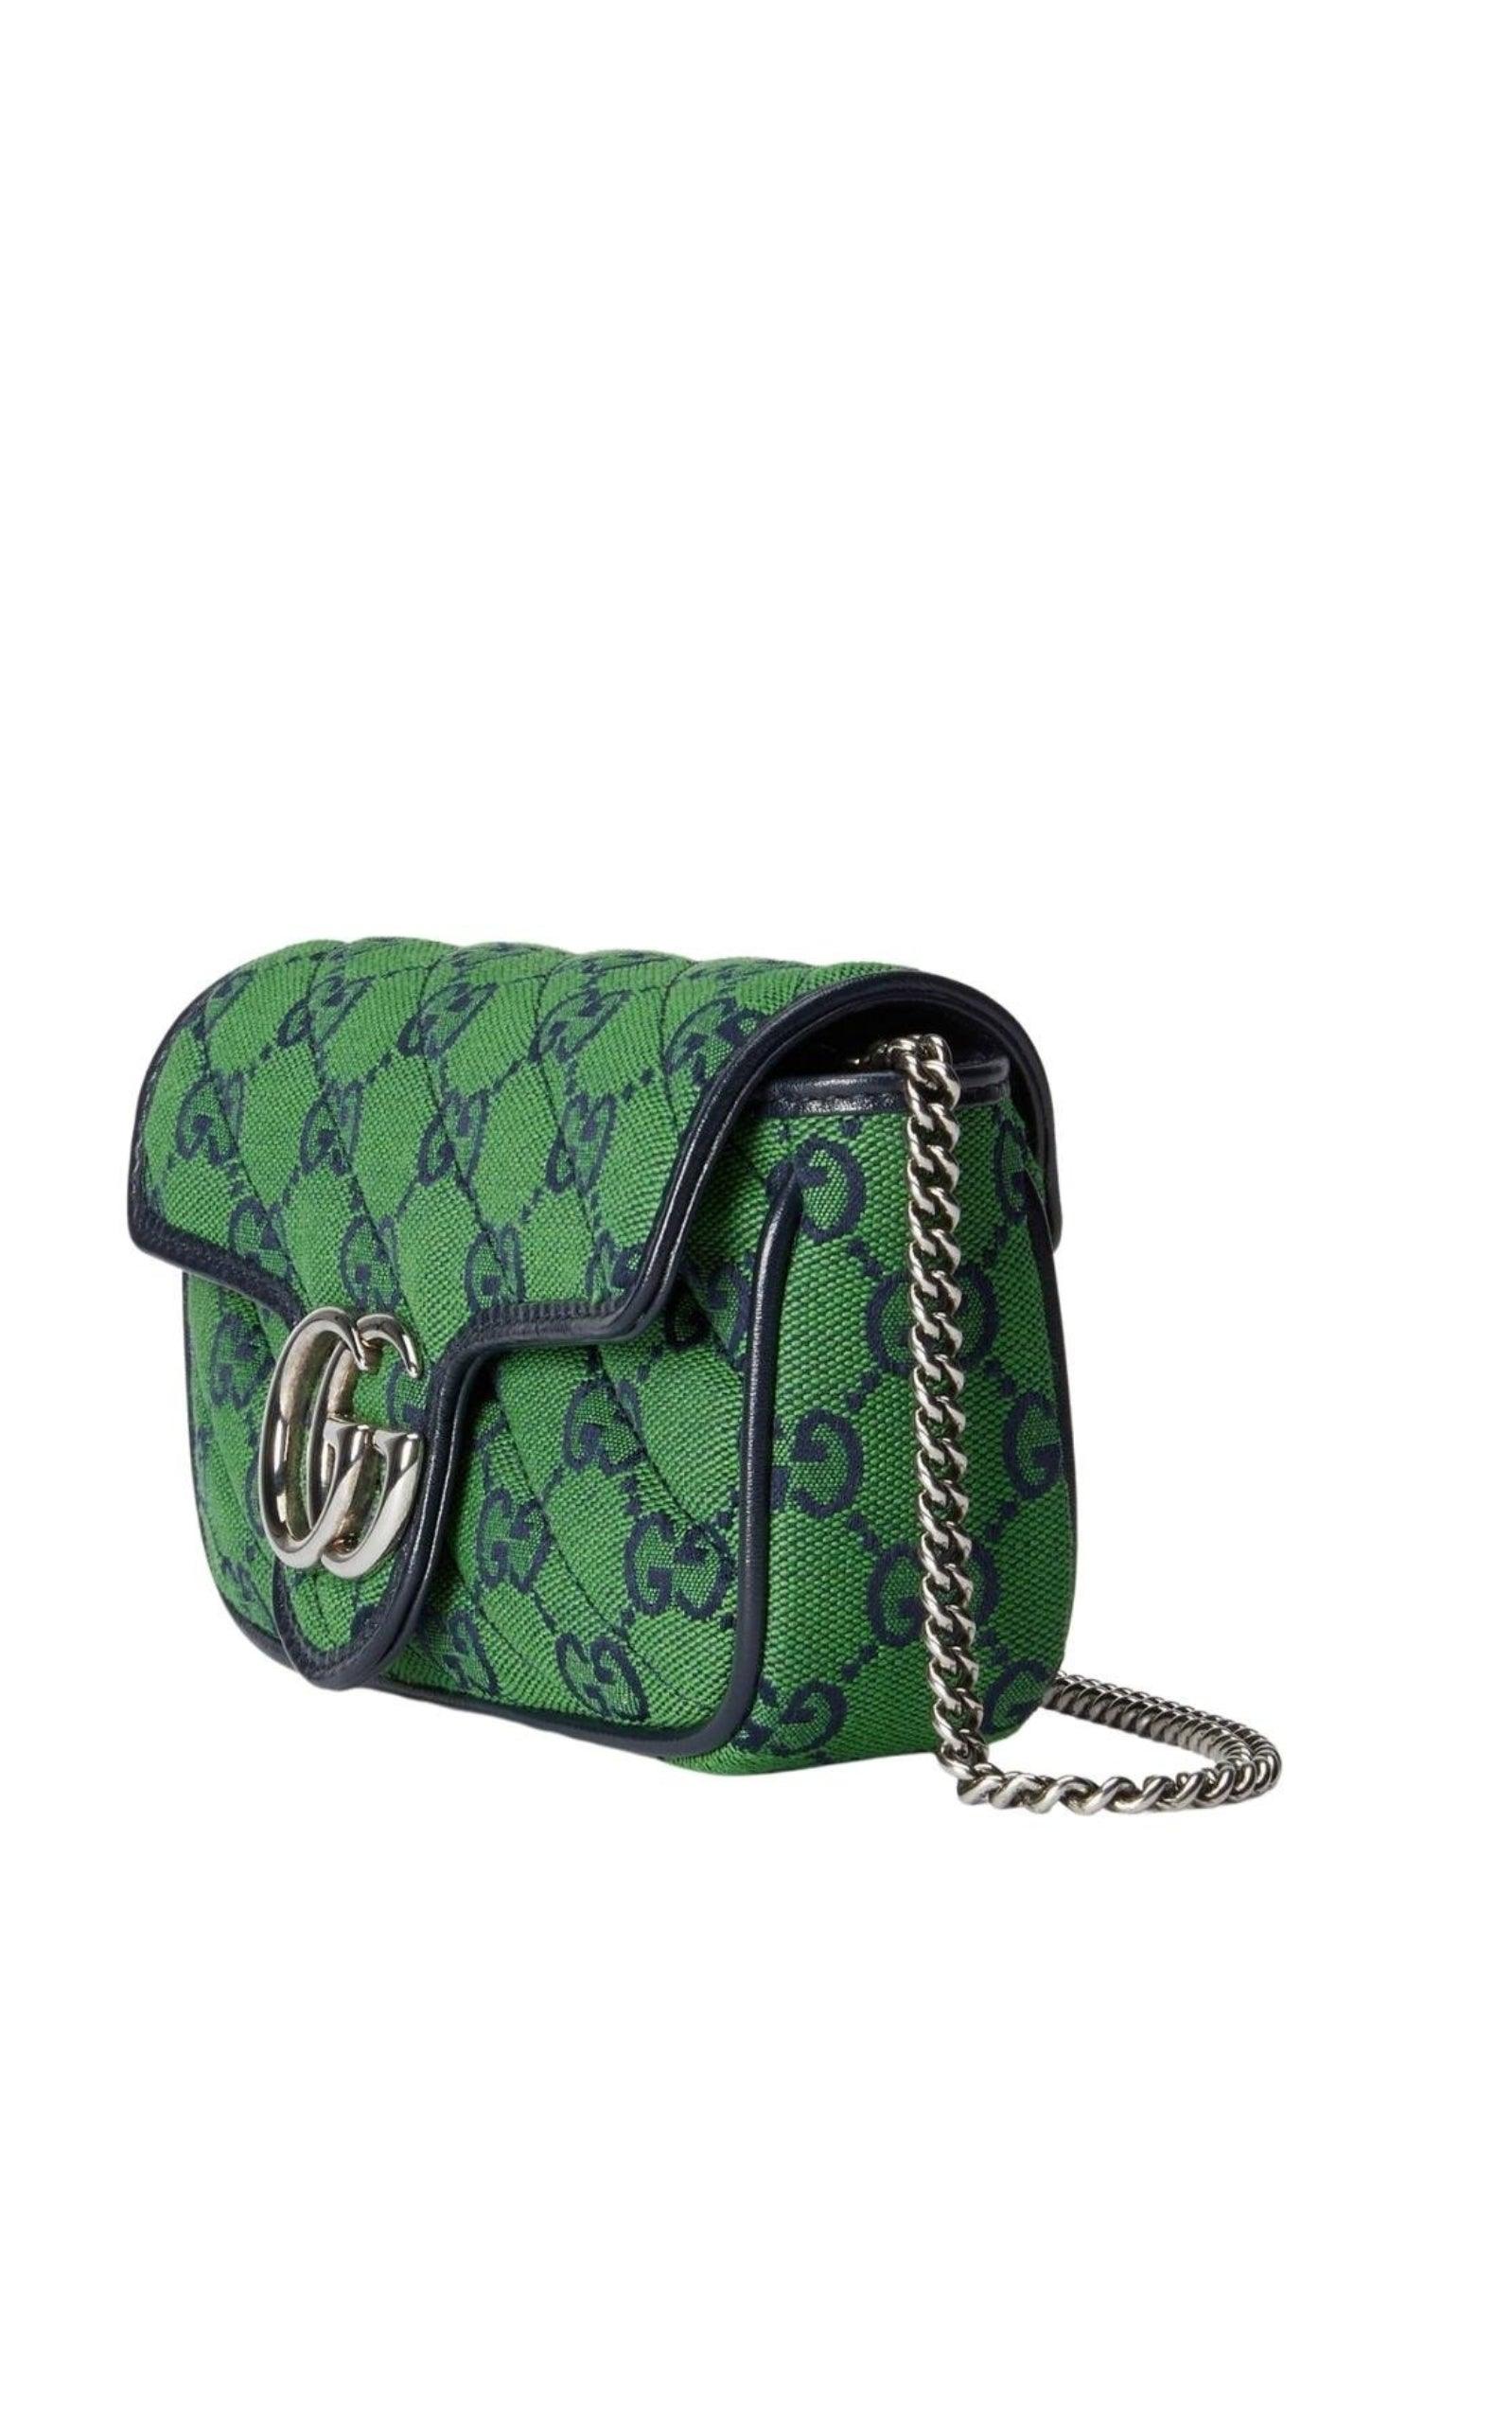 GG Crystal Mini Crossbody Bag in Green - Gucci